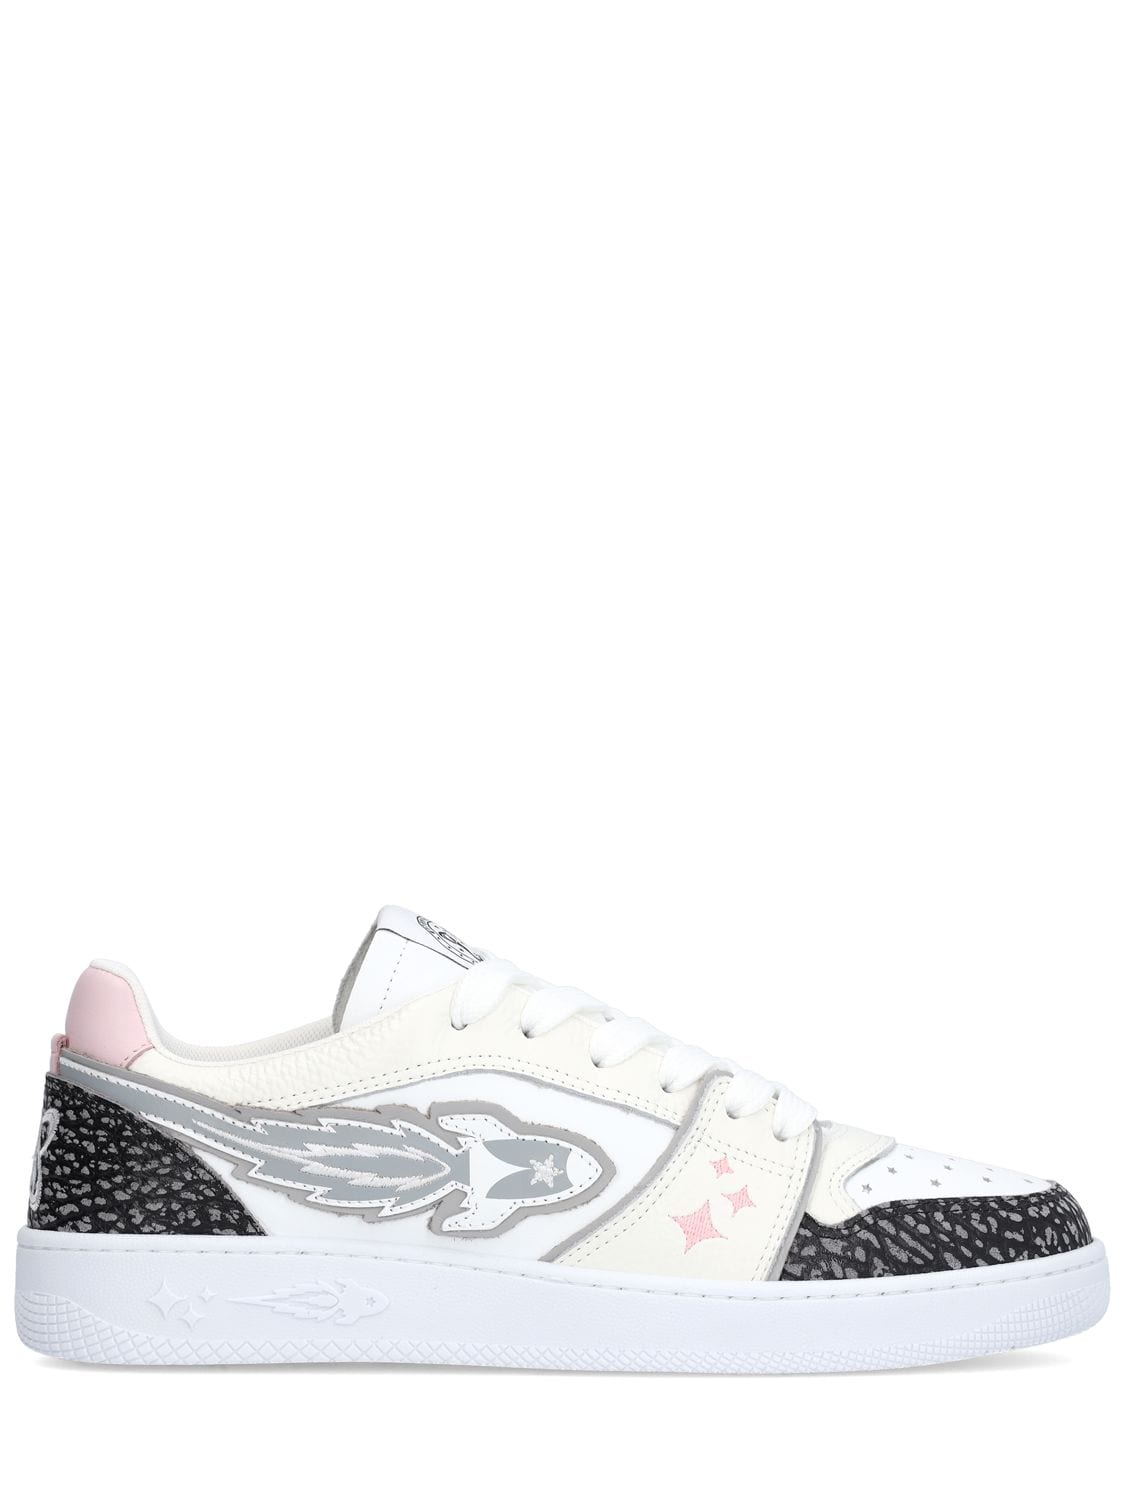 Enterprise Japan Low Logo Sneakers In White,grey,pink